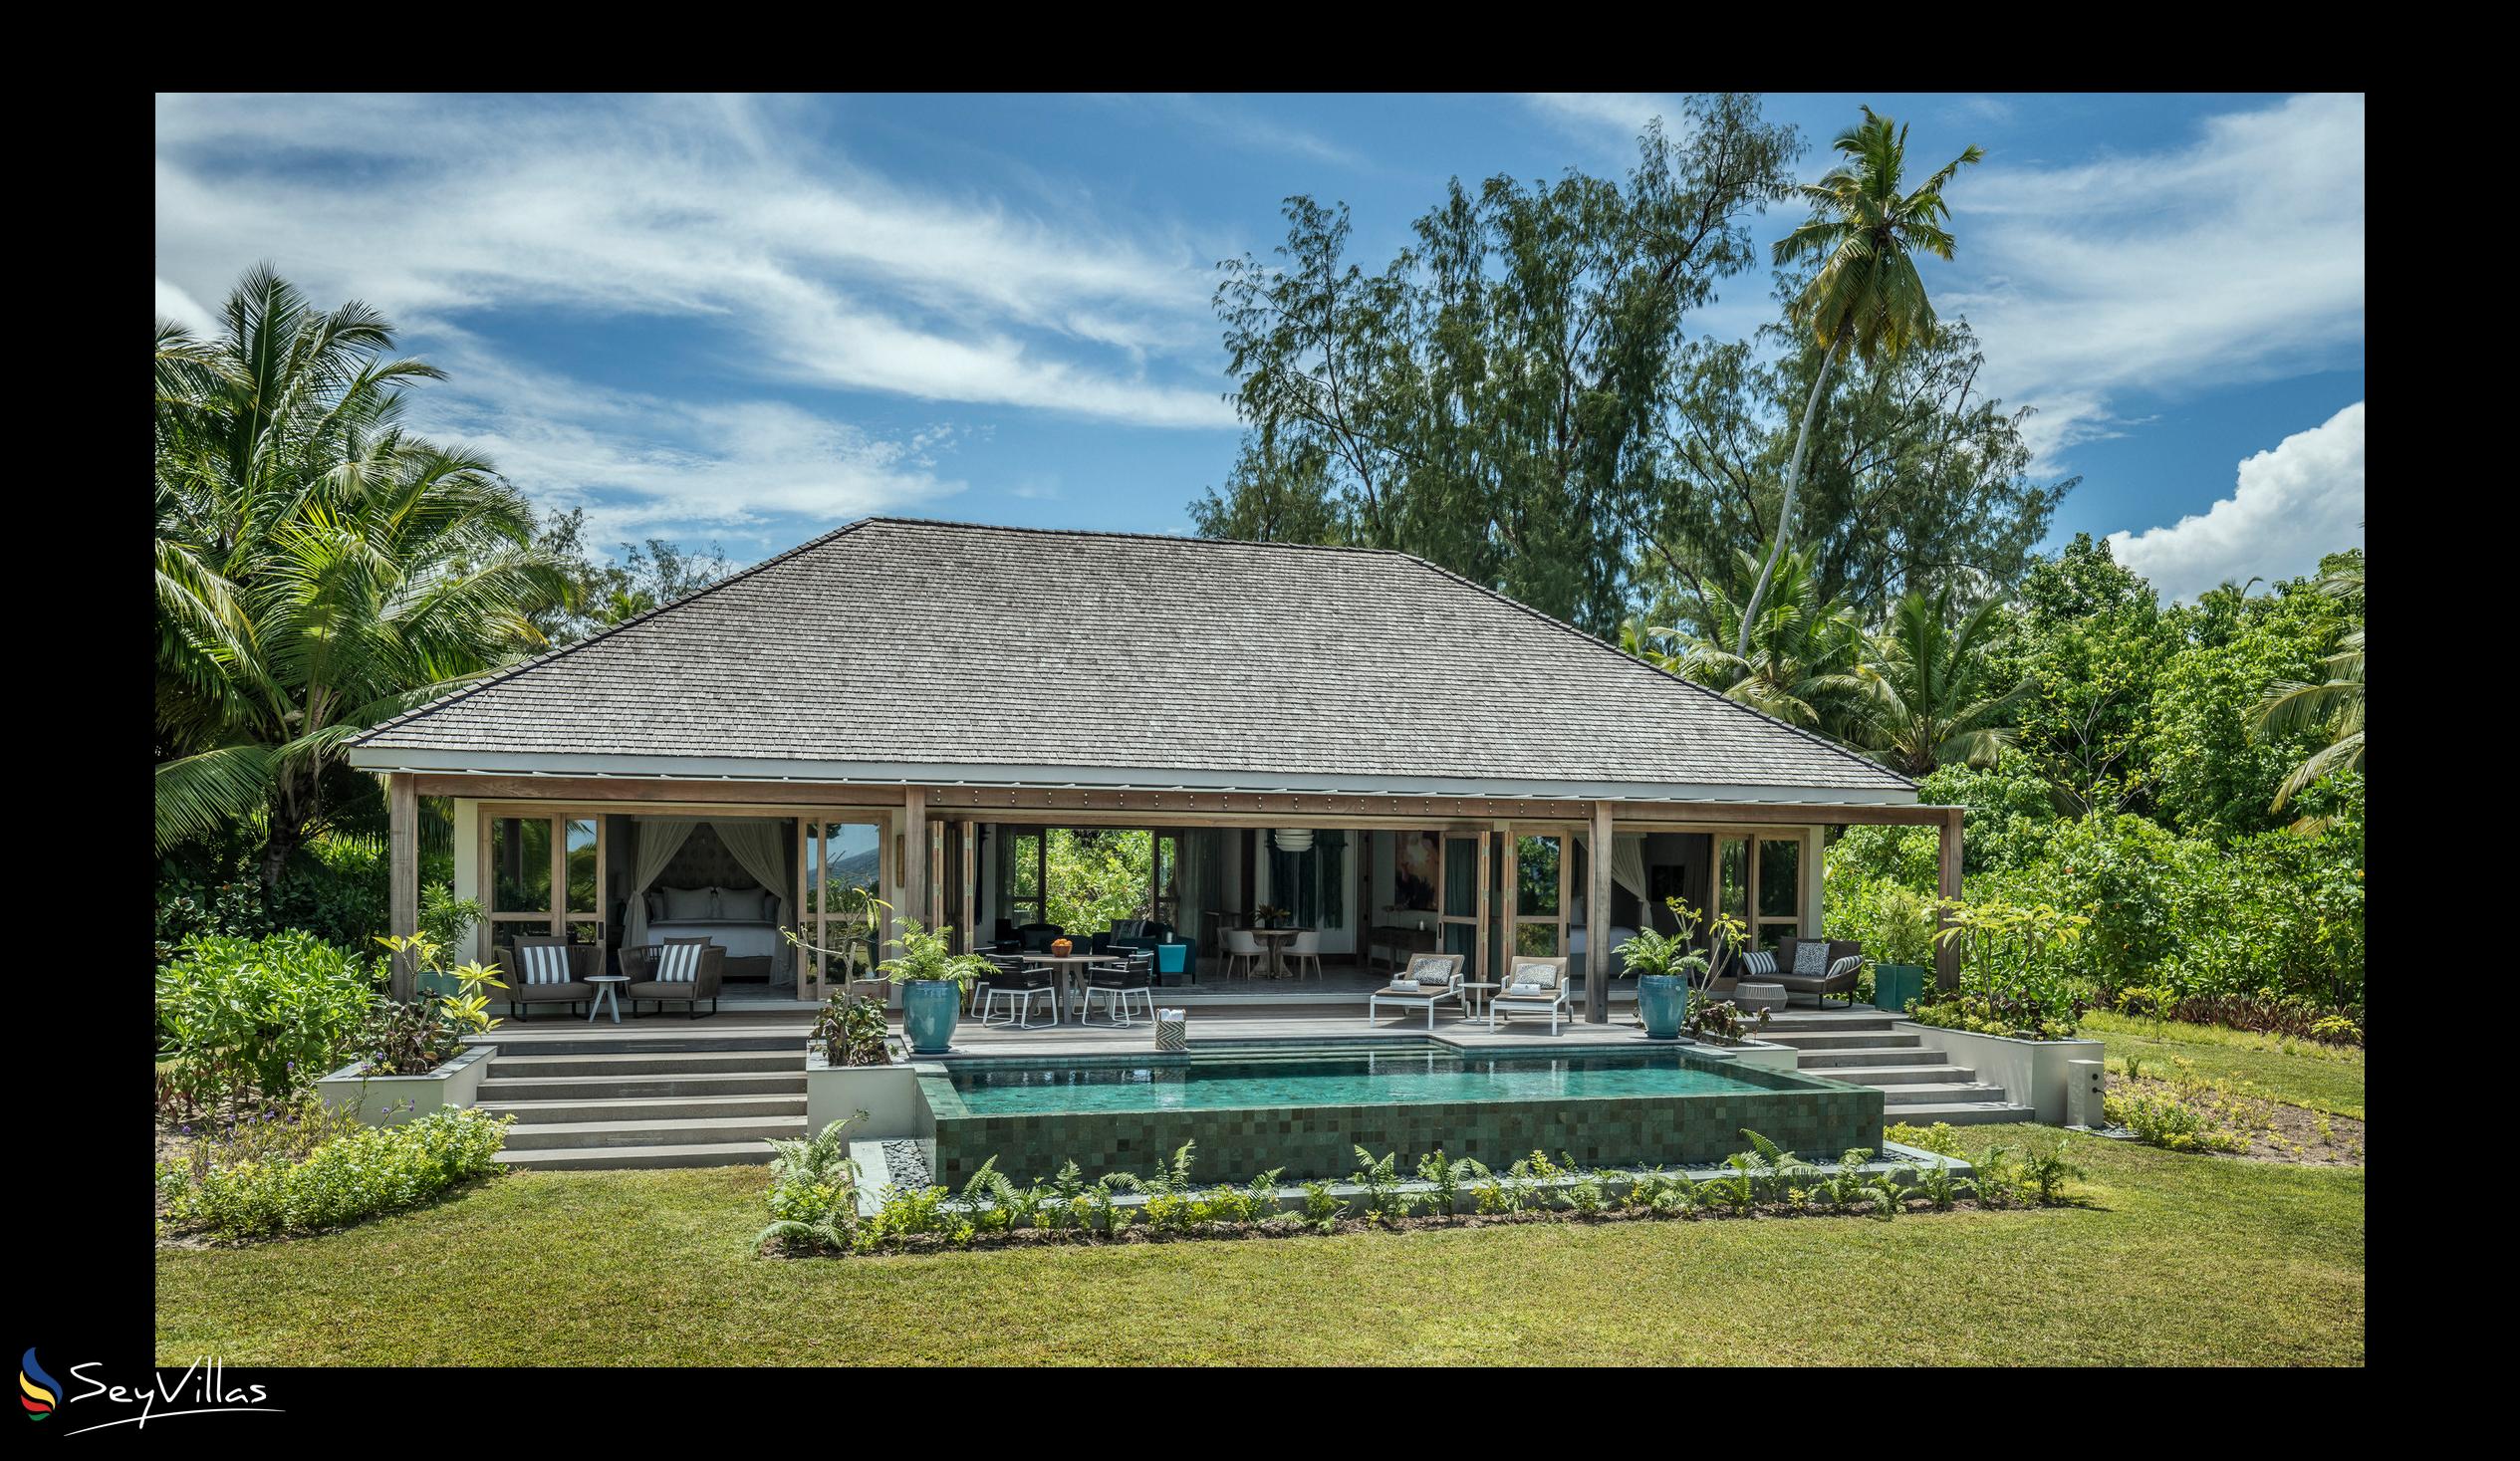 Foto 59: Four Seasons Resort Desroches Island - 2-Schlafzimmer Residenz-Villa - Desroches Island (Seychellen)